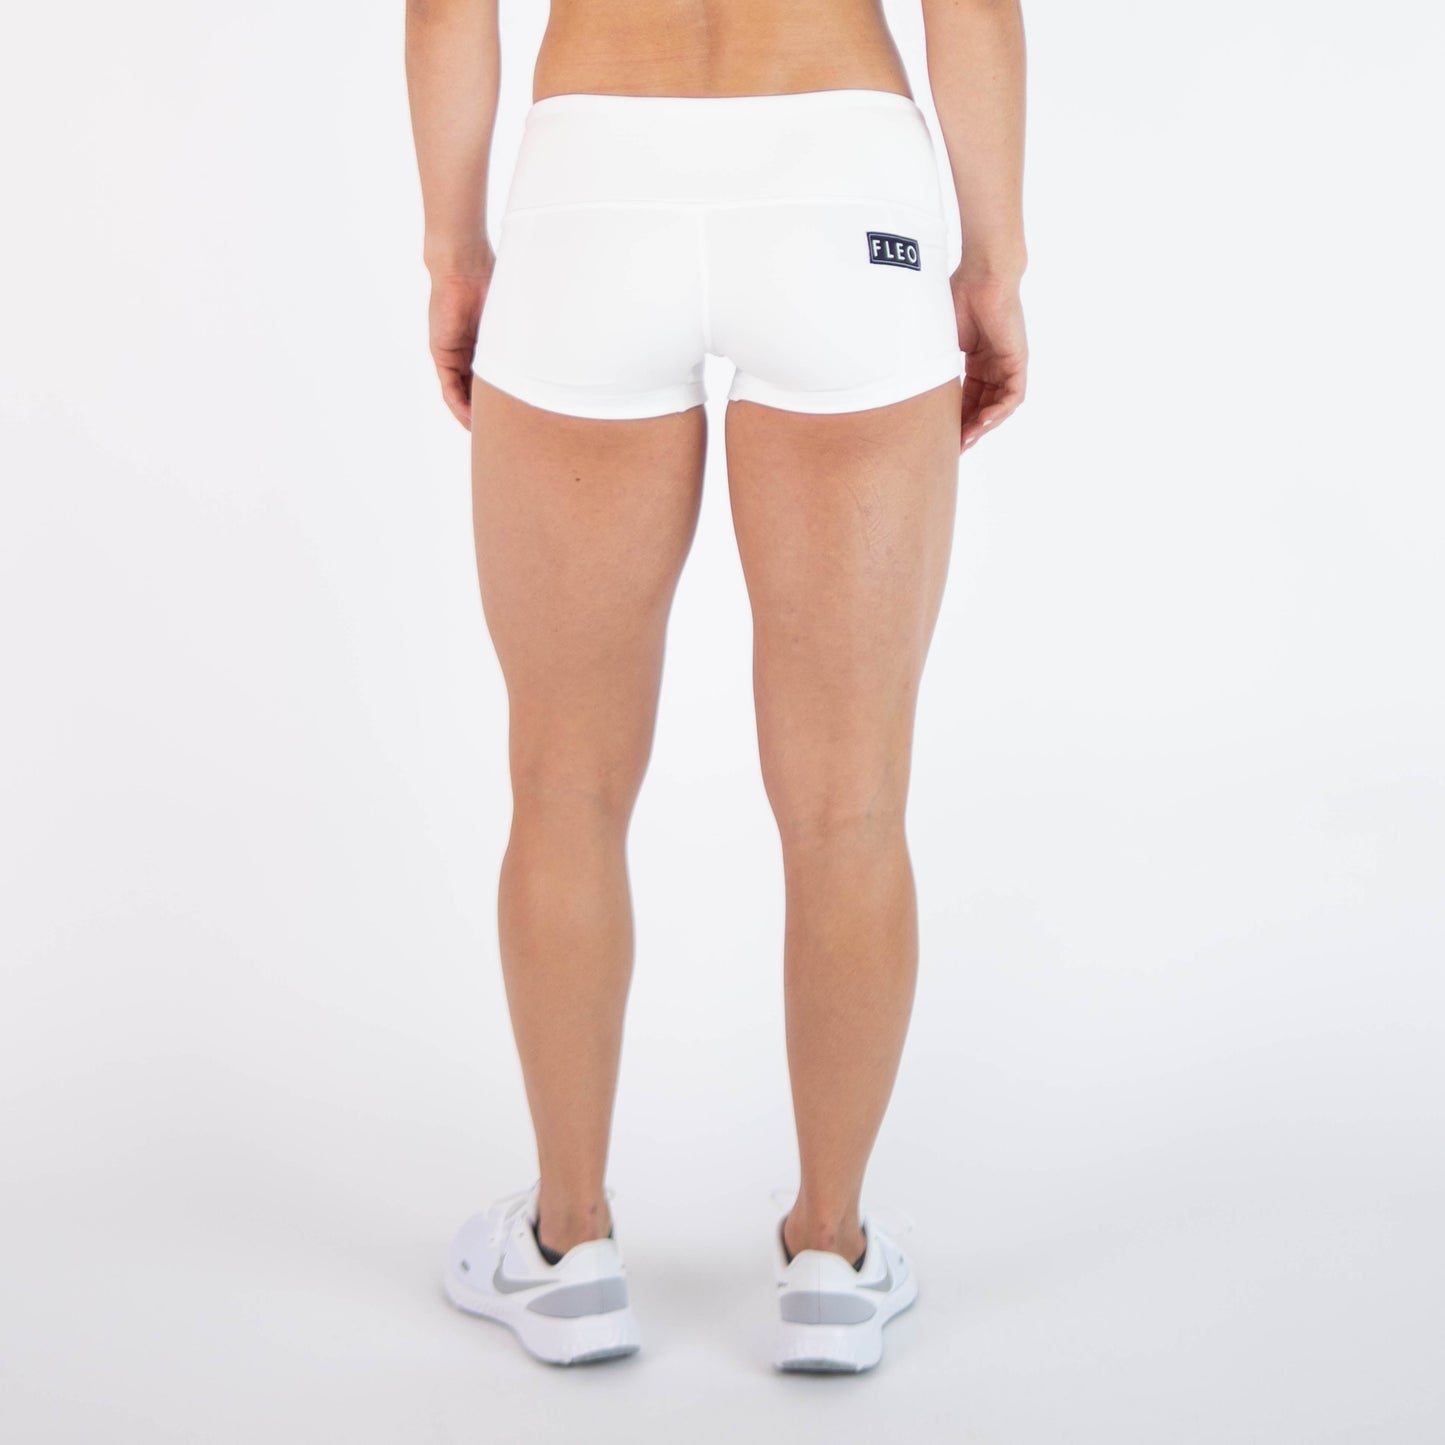 FLEO White Shorts (Low-rise Contour)